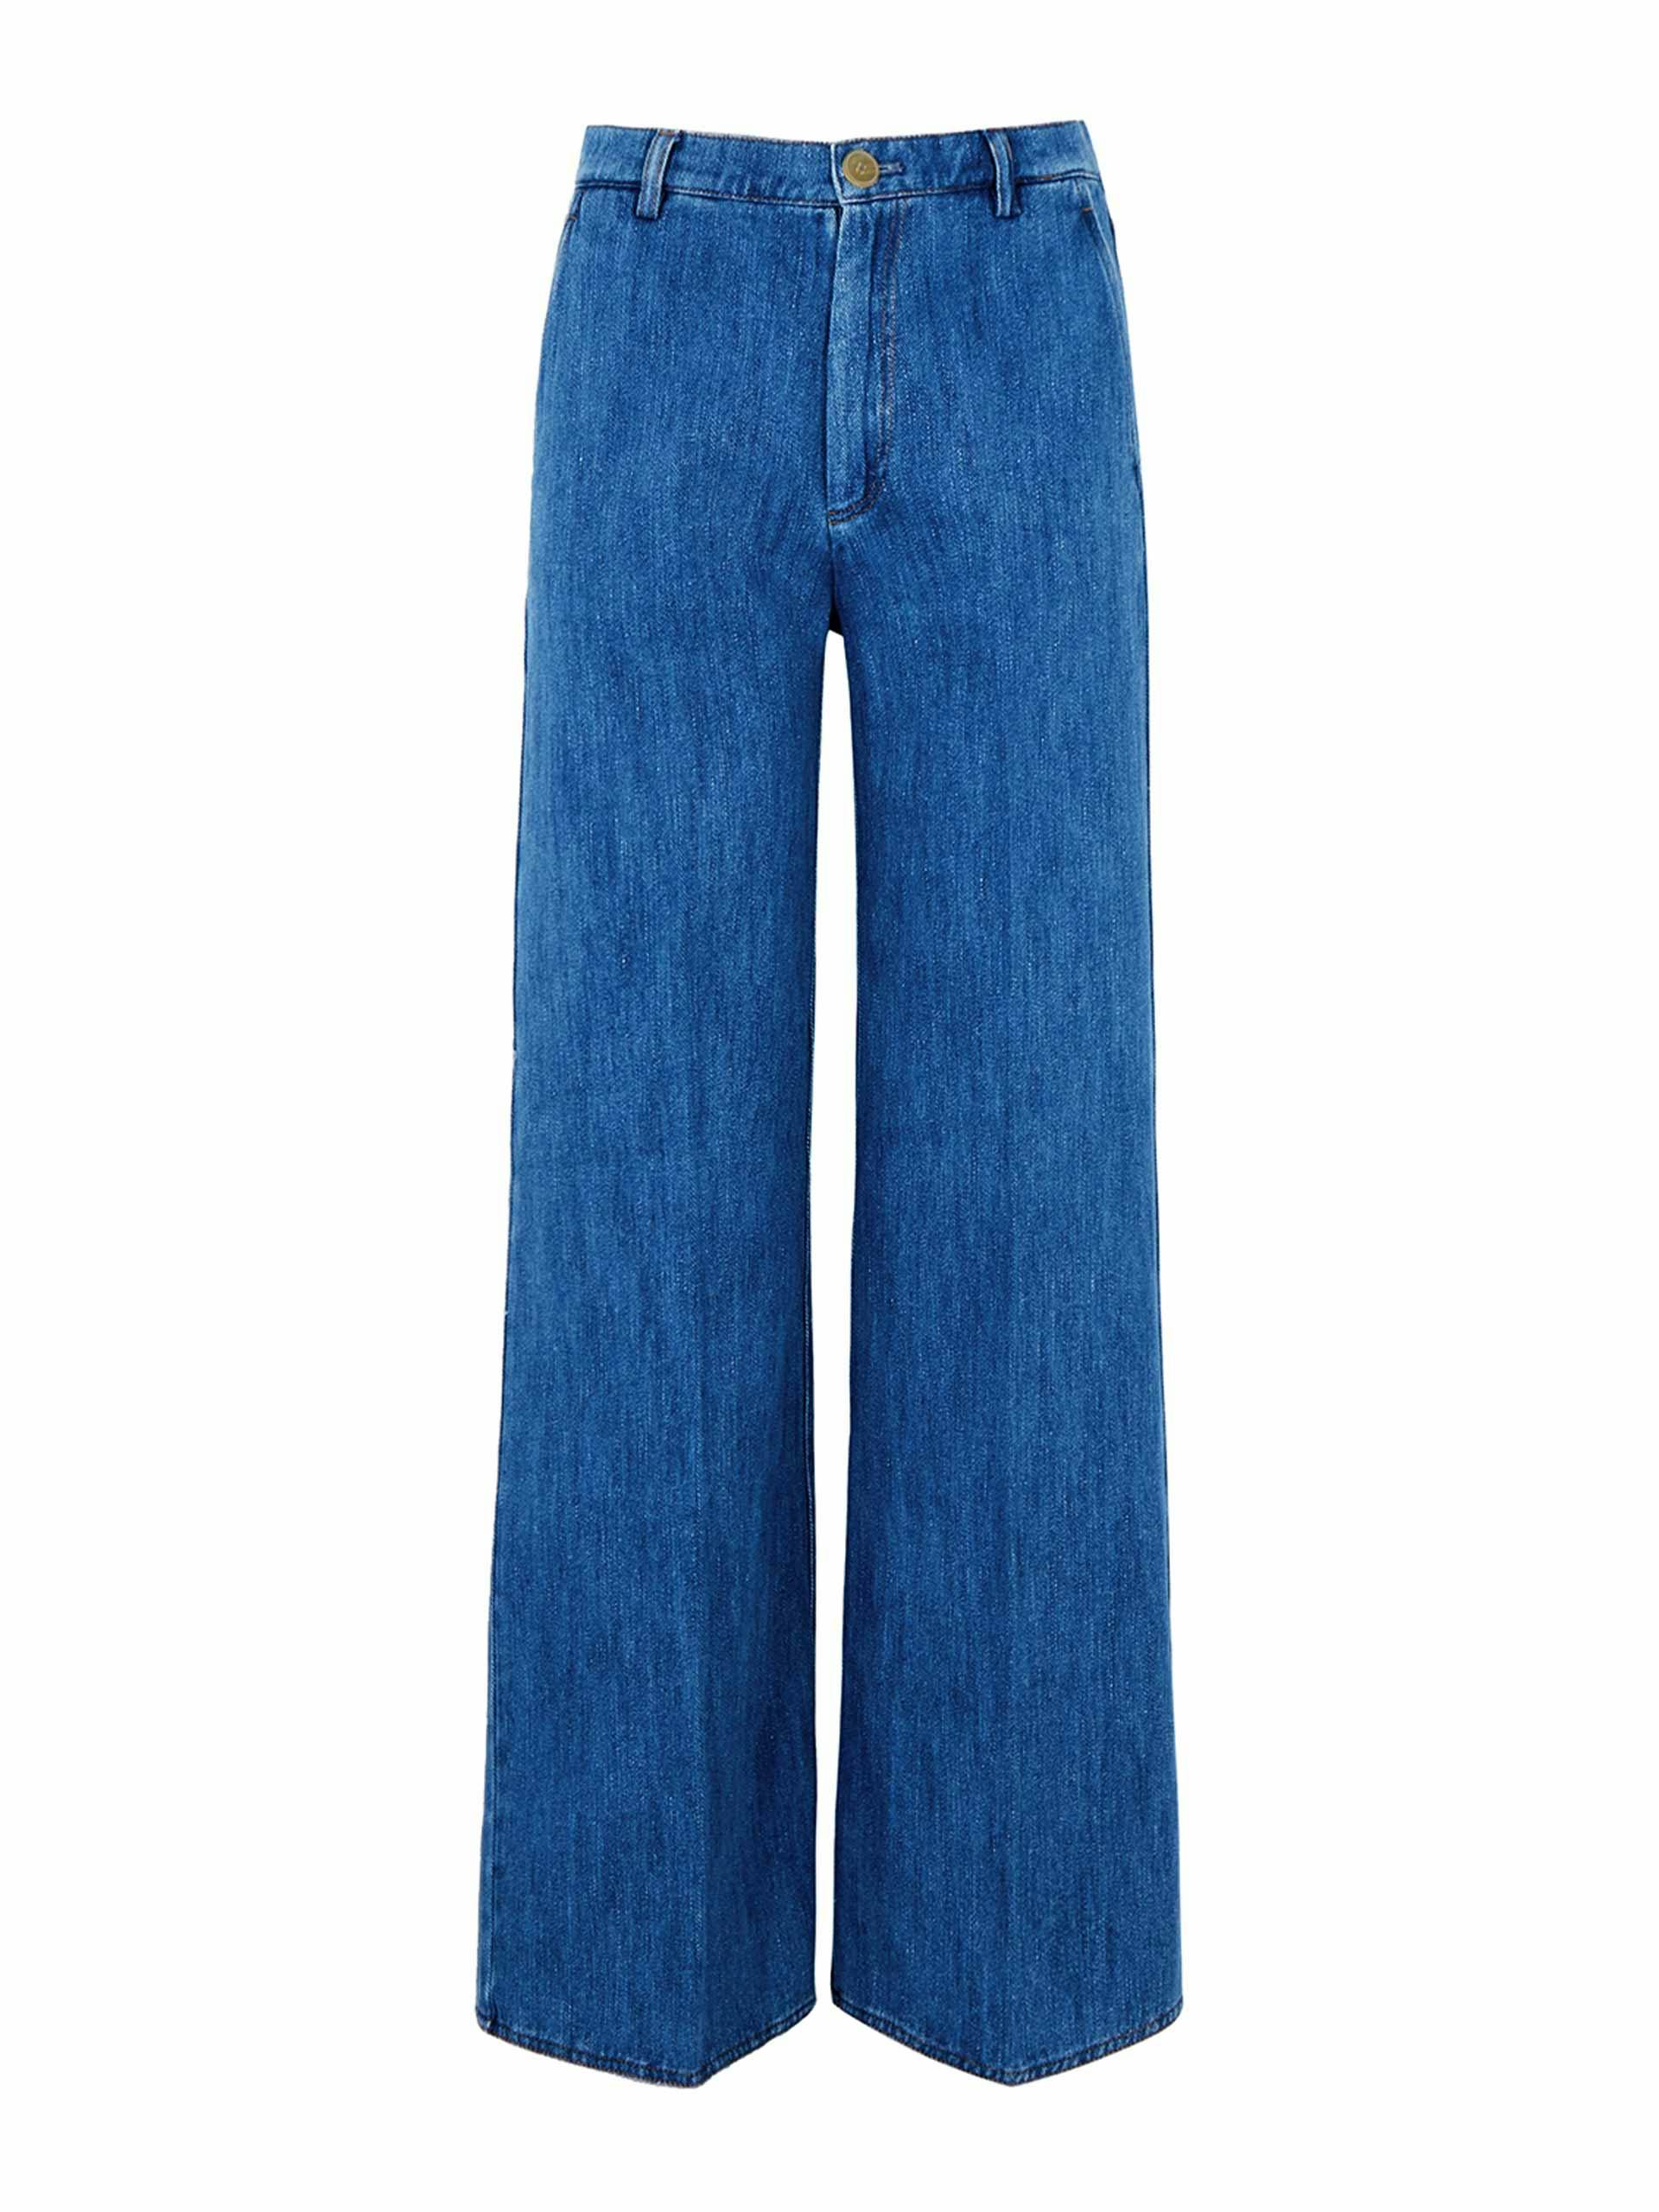 Blue wide leg jeans